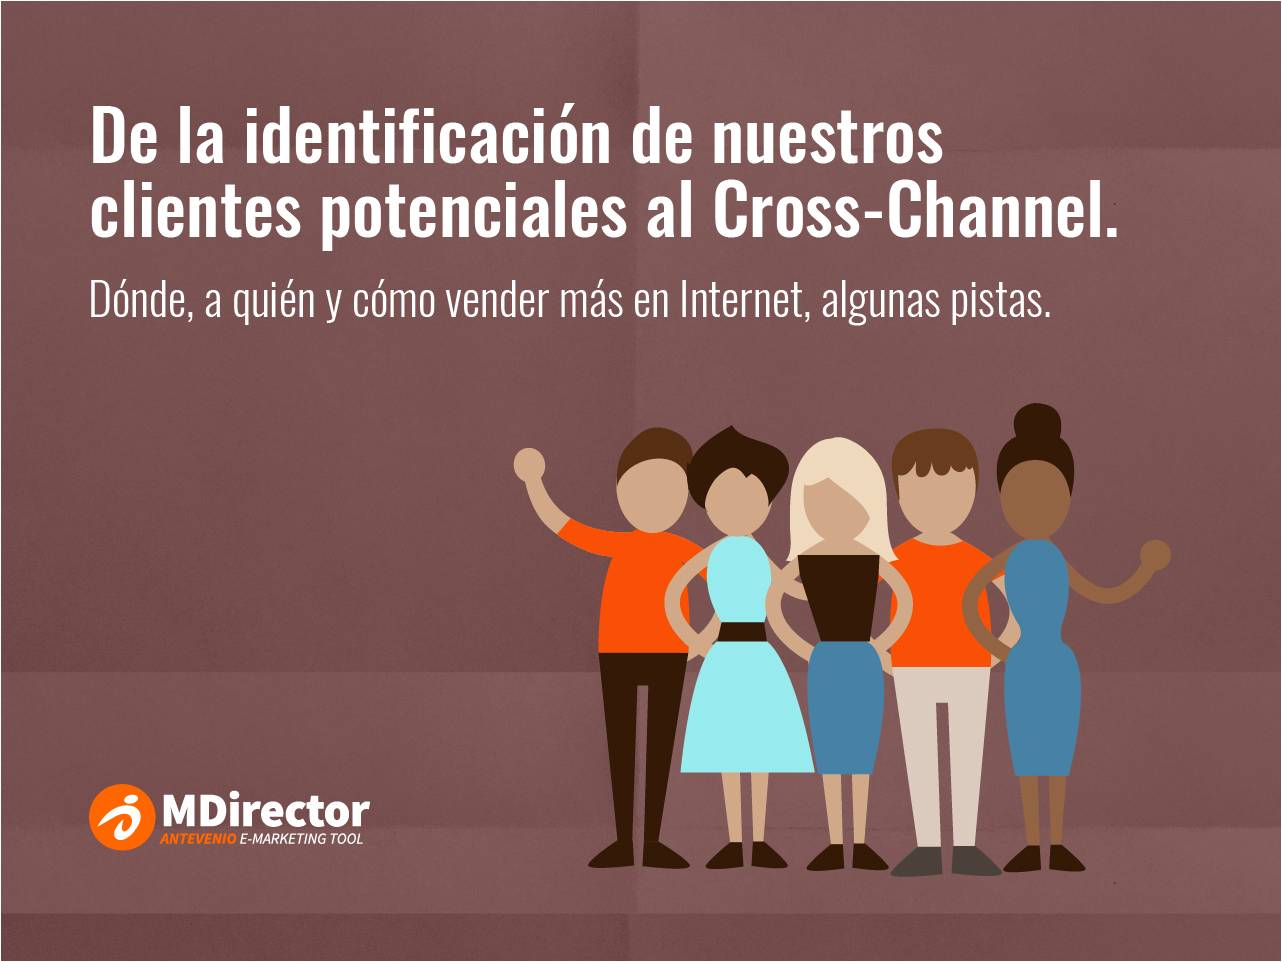 Cross-Channel Marketing by MDirector